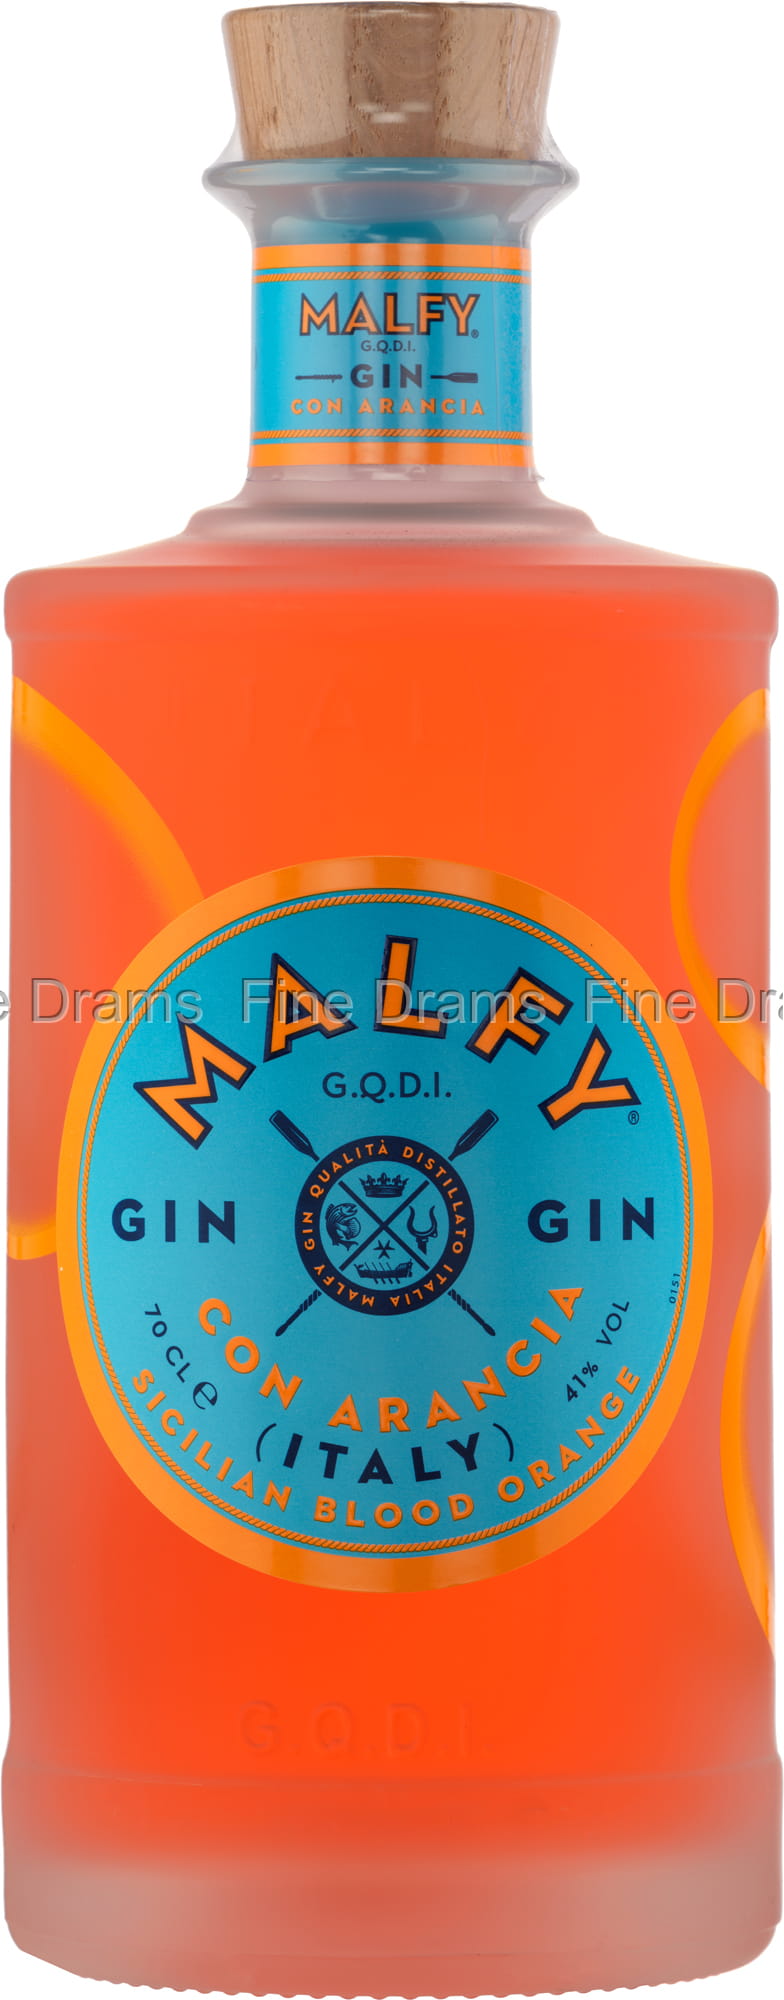 Malfy Gin 70 Arancia 41 cl, Con